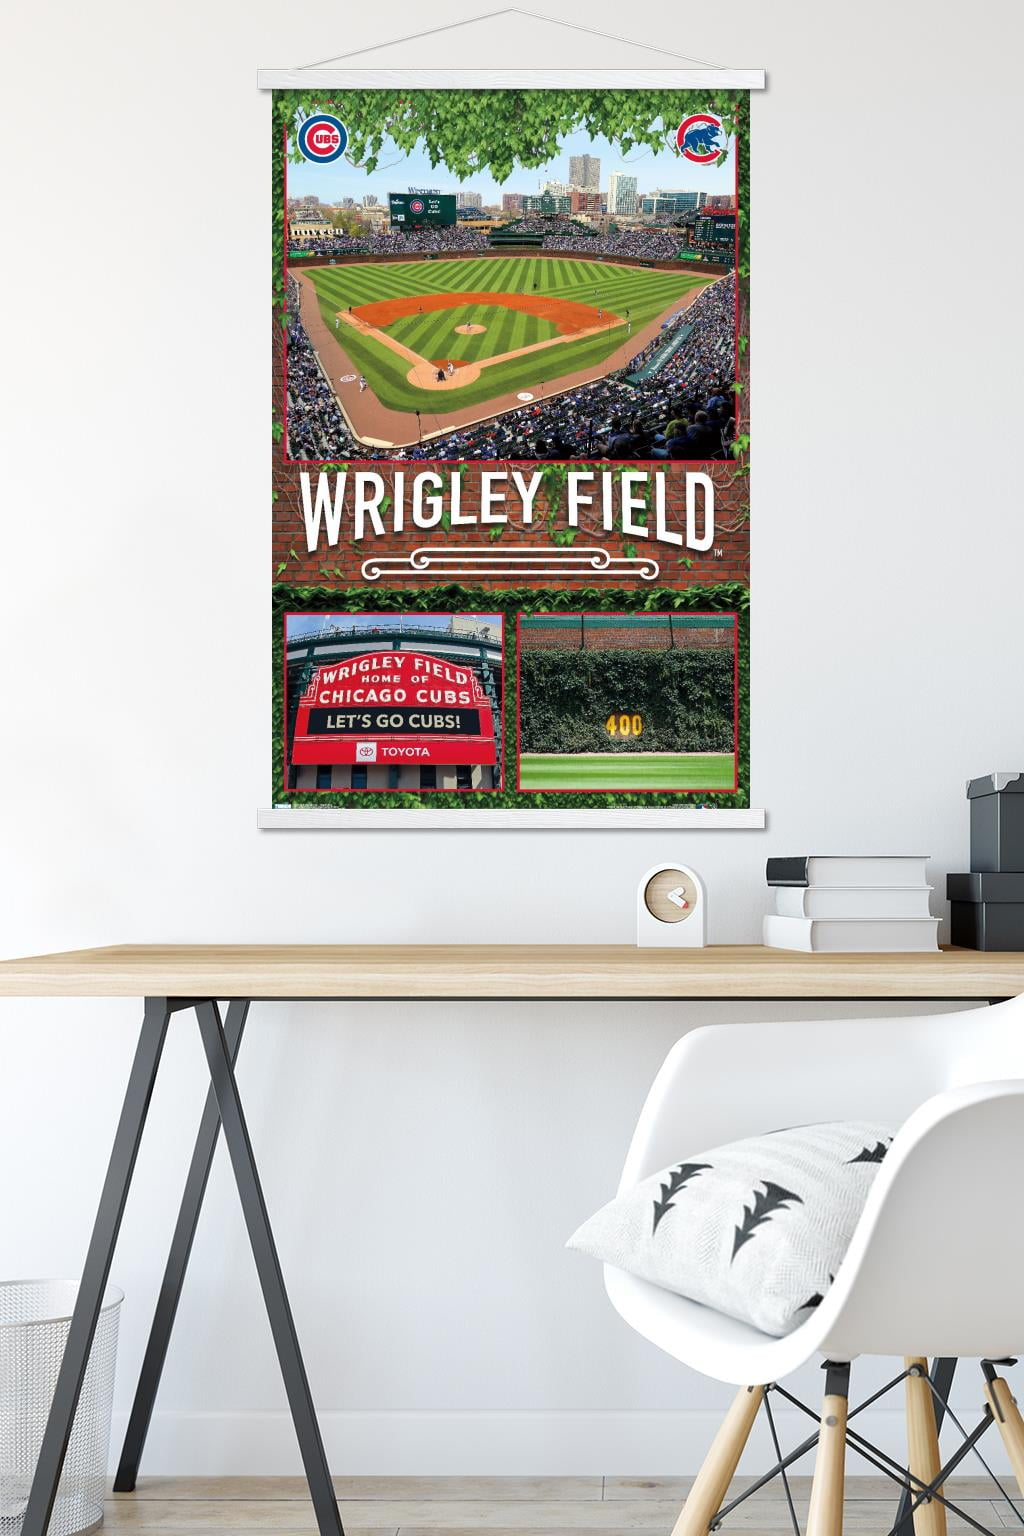 Trends International Mlb Rivalries - St. Louis Cardinals Vs Chicago Cubs  Framed Wall Poster Prints Barnwood Framed Version 14.725 X 22.375 : Target